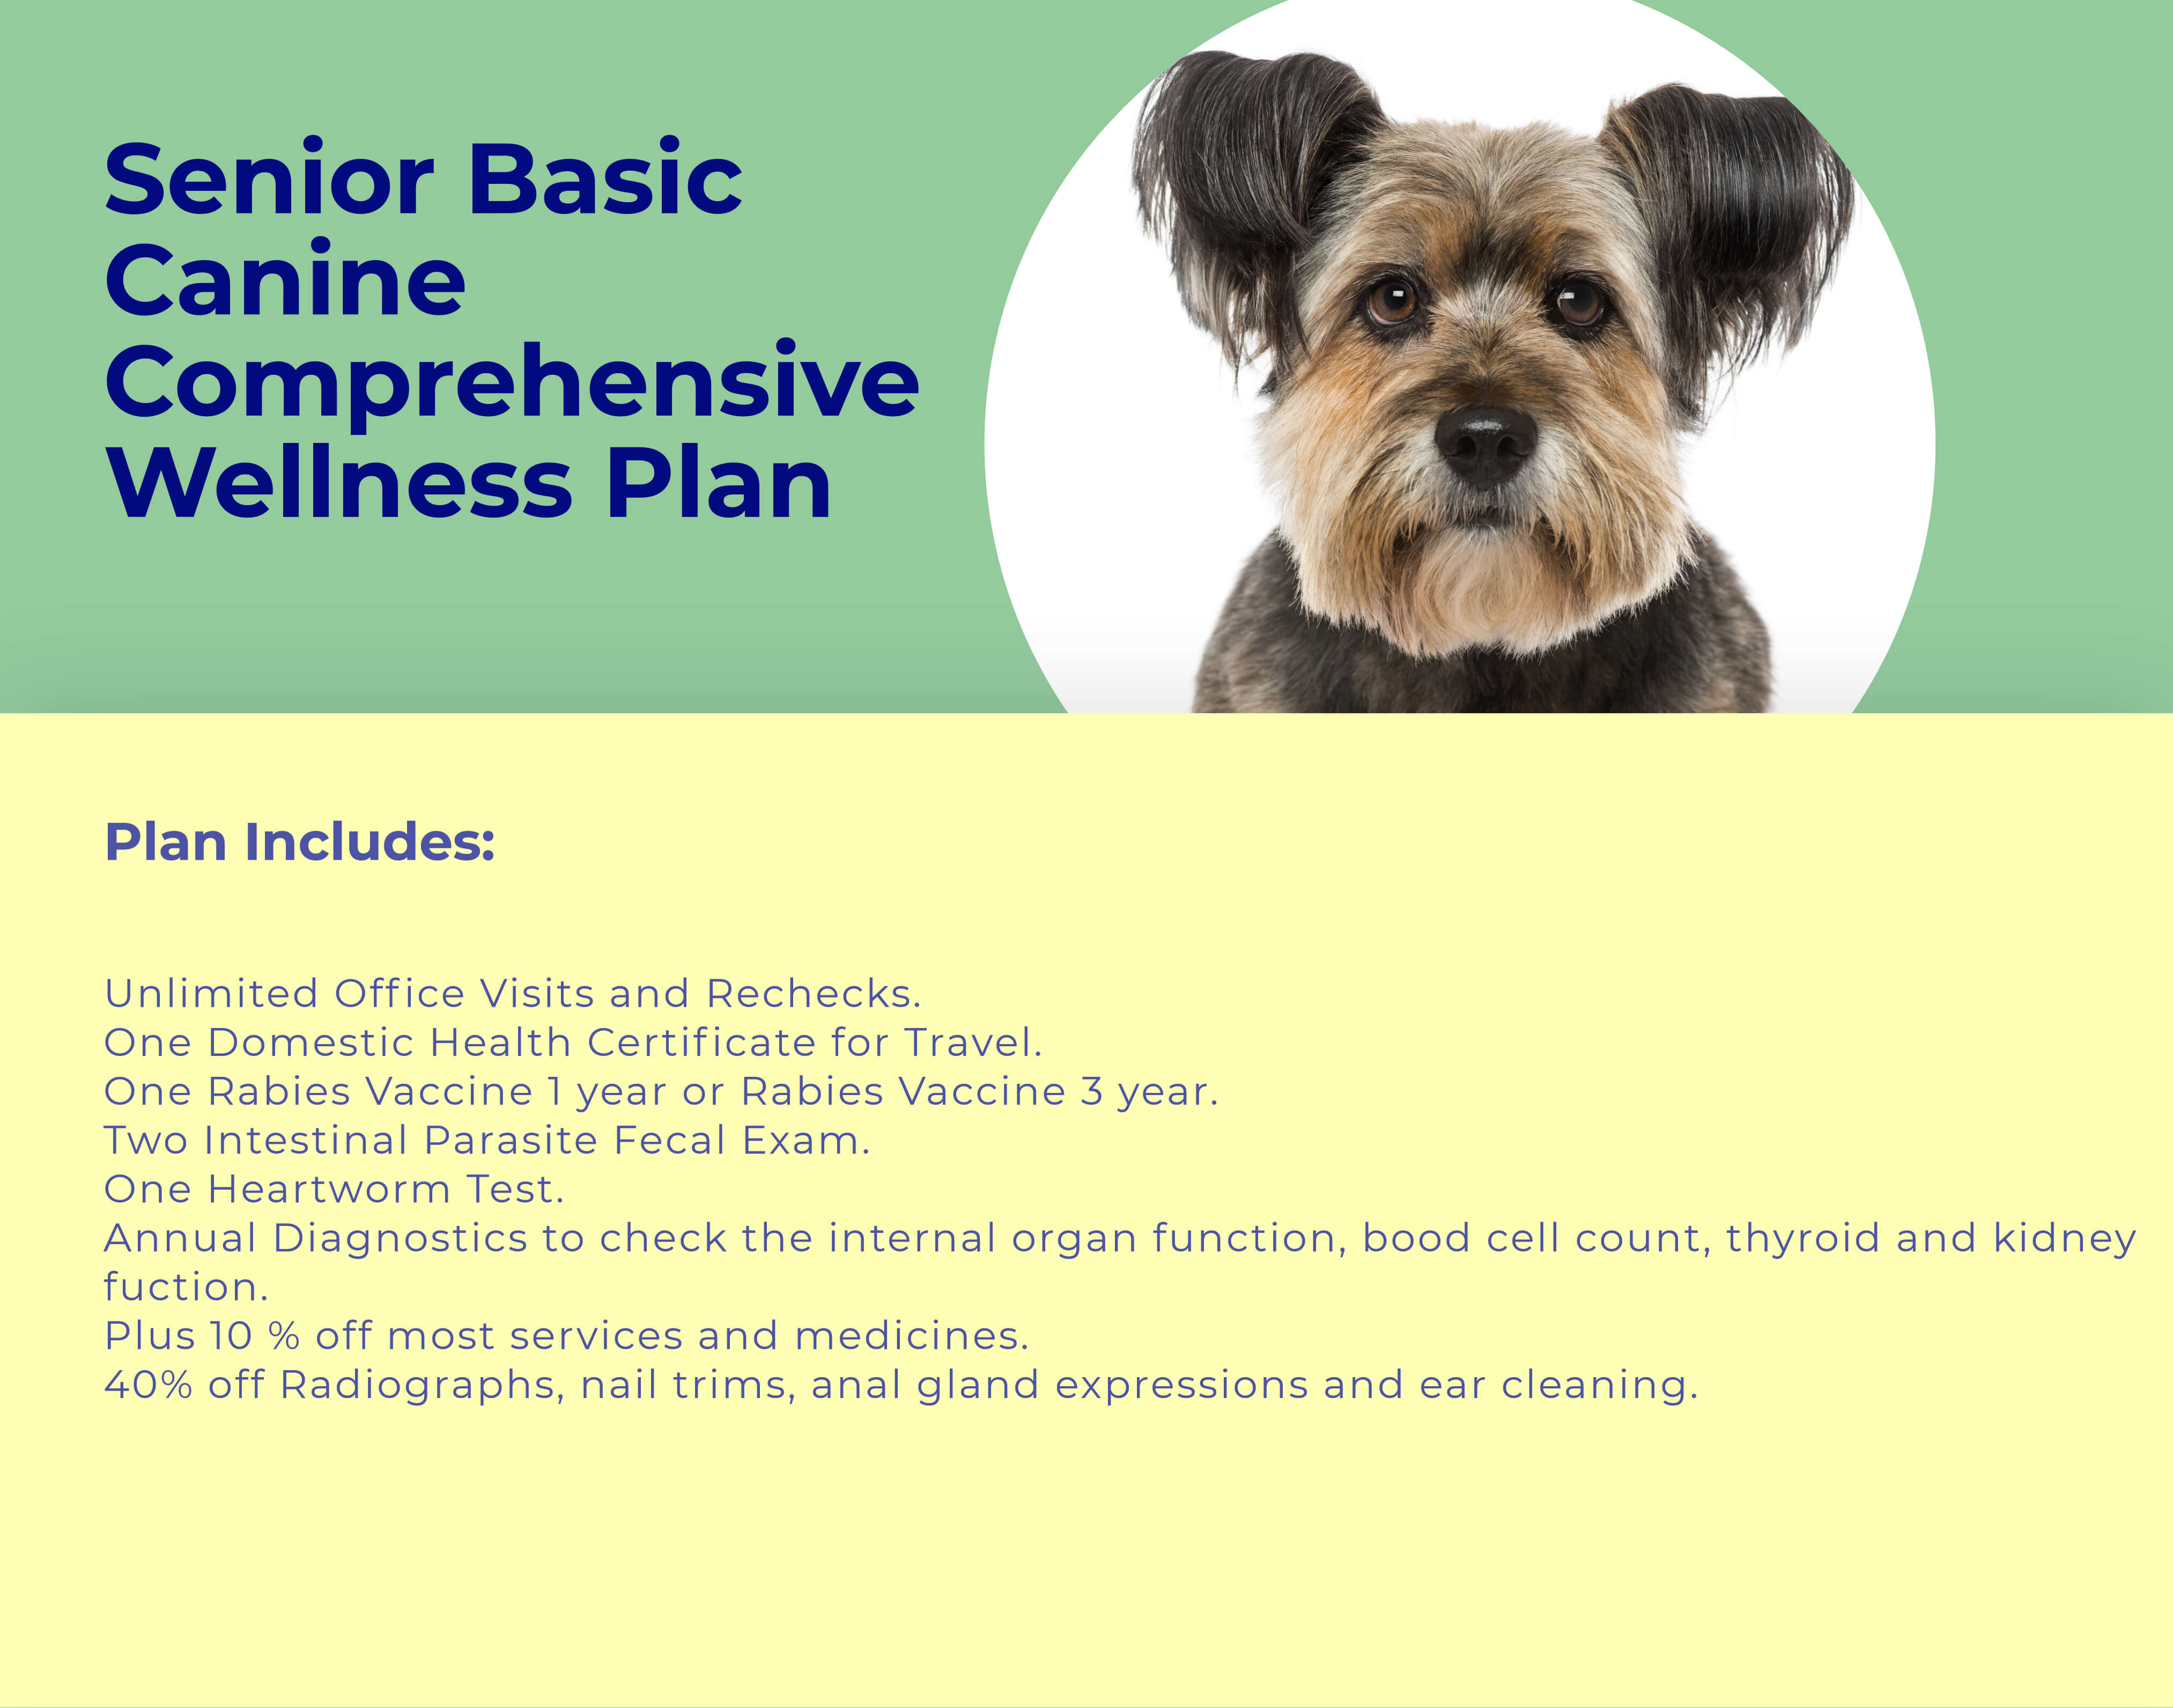 Senior Dog BASIC Comprehensive Wellness Plan at animal wellness clinic